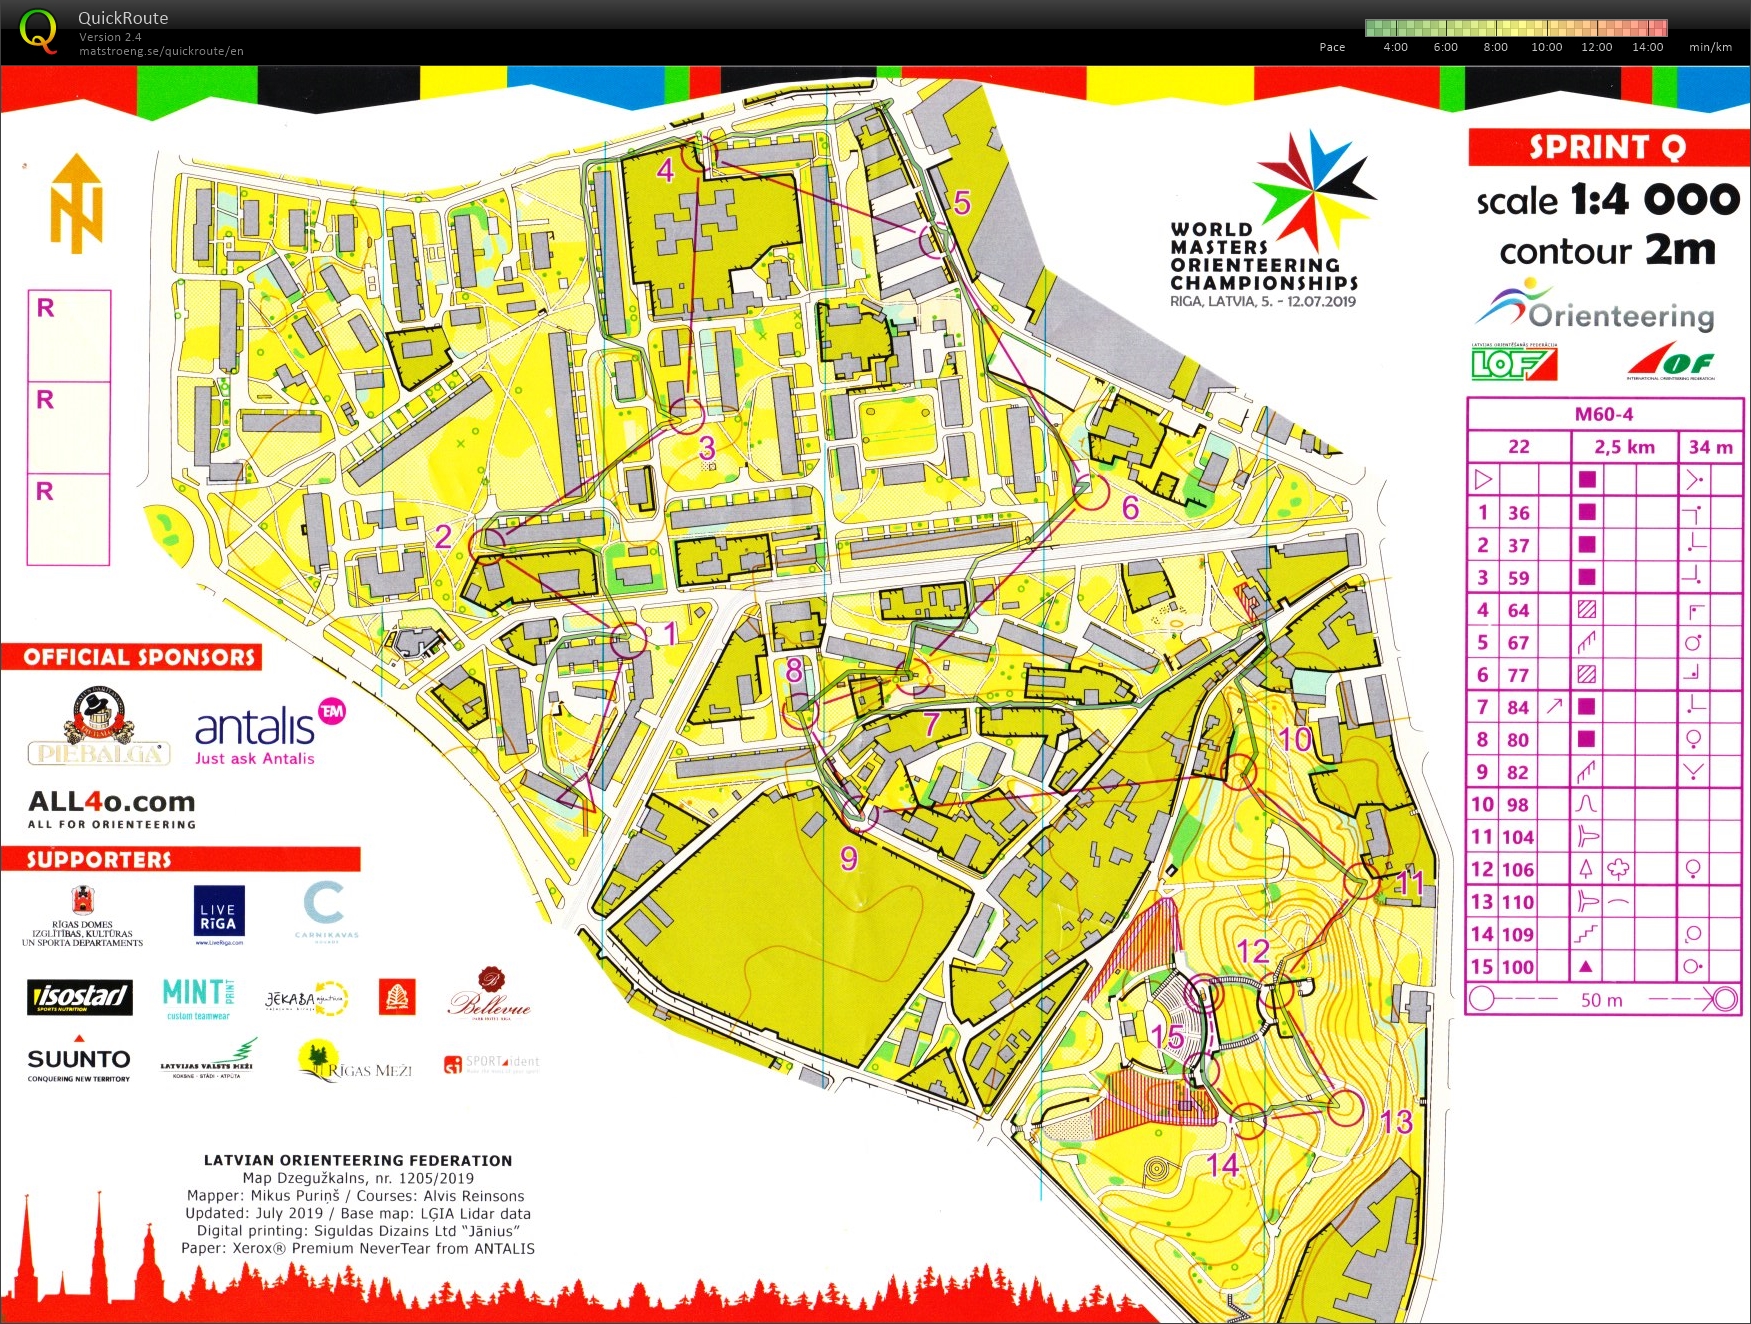 WMOC i Riga - sprintkvalifisering, M60-4 (06-07-2019)